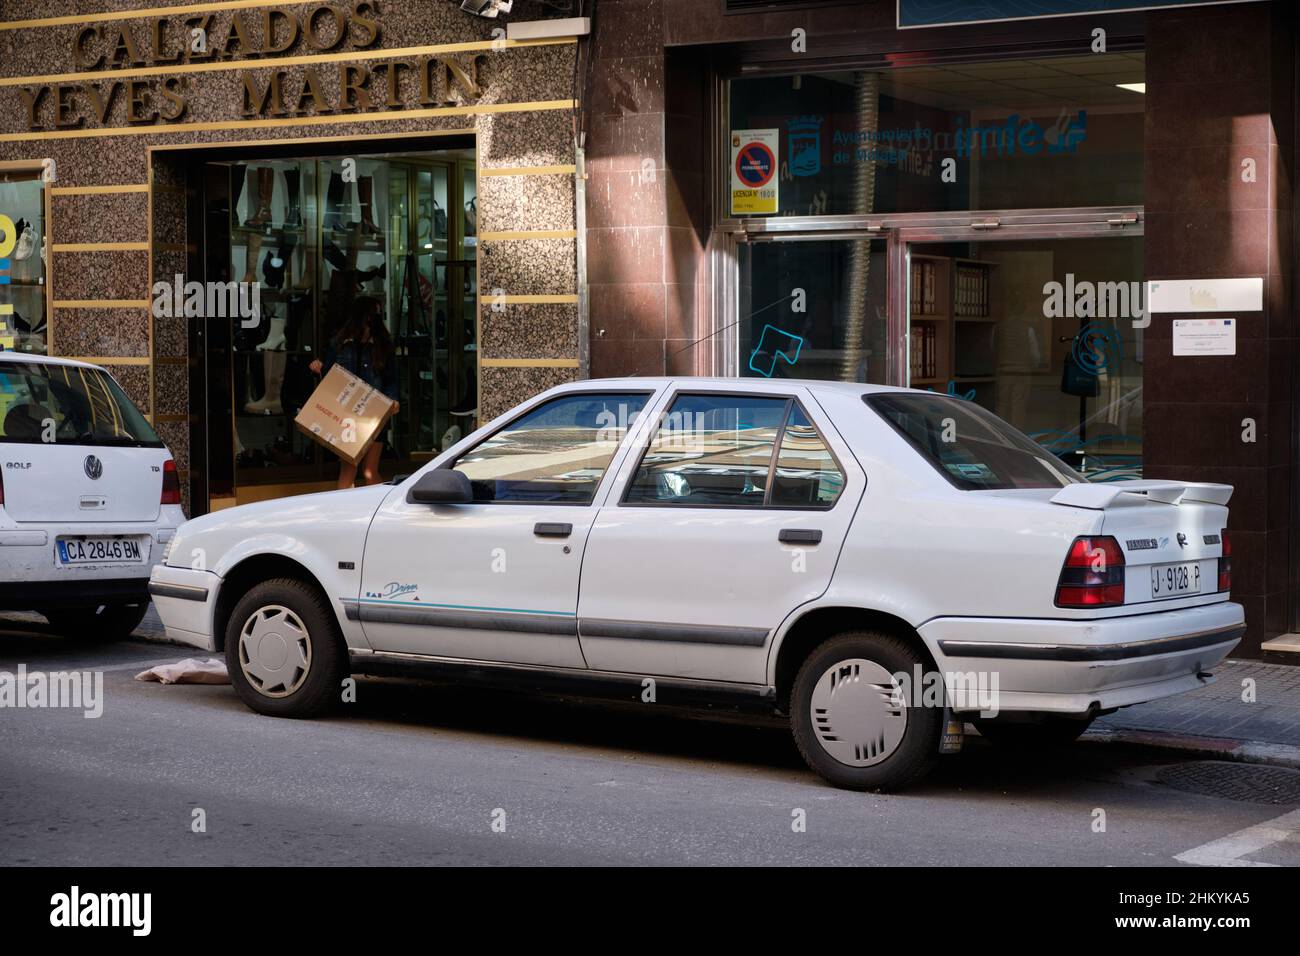 1991 Renault 19 Chamade geparkt in Malaga, Spanien. Stockfoto